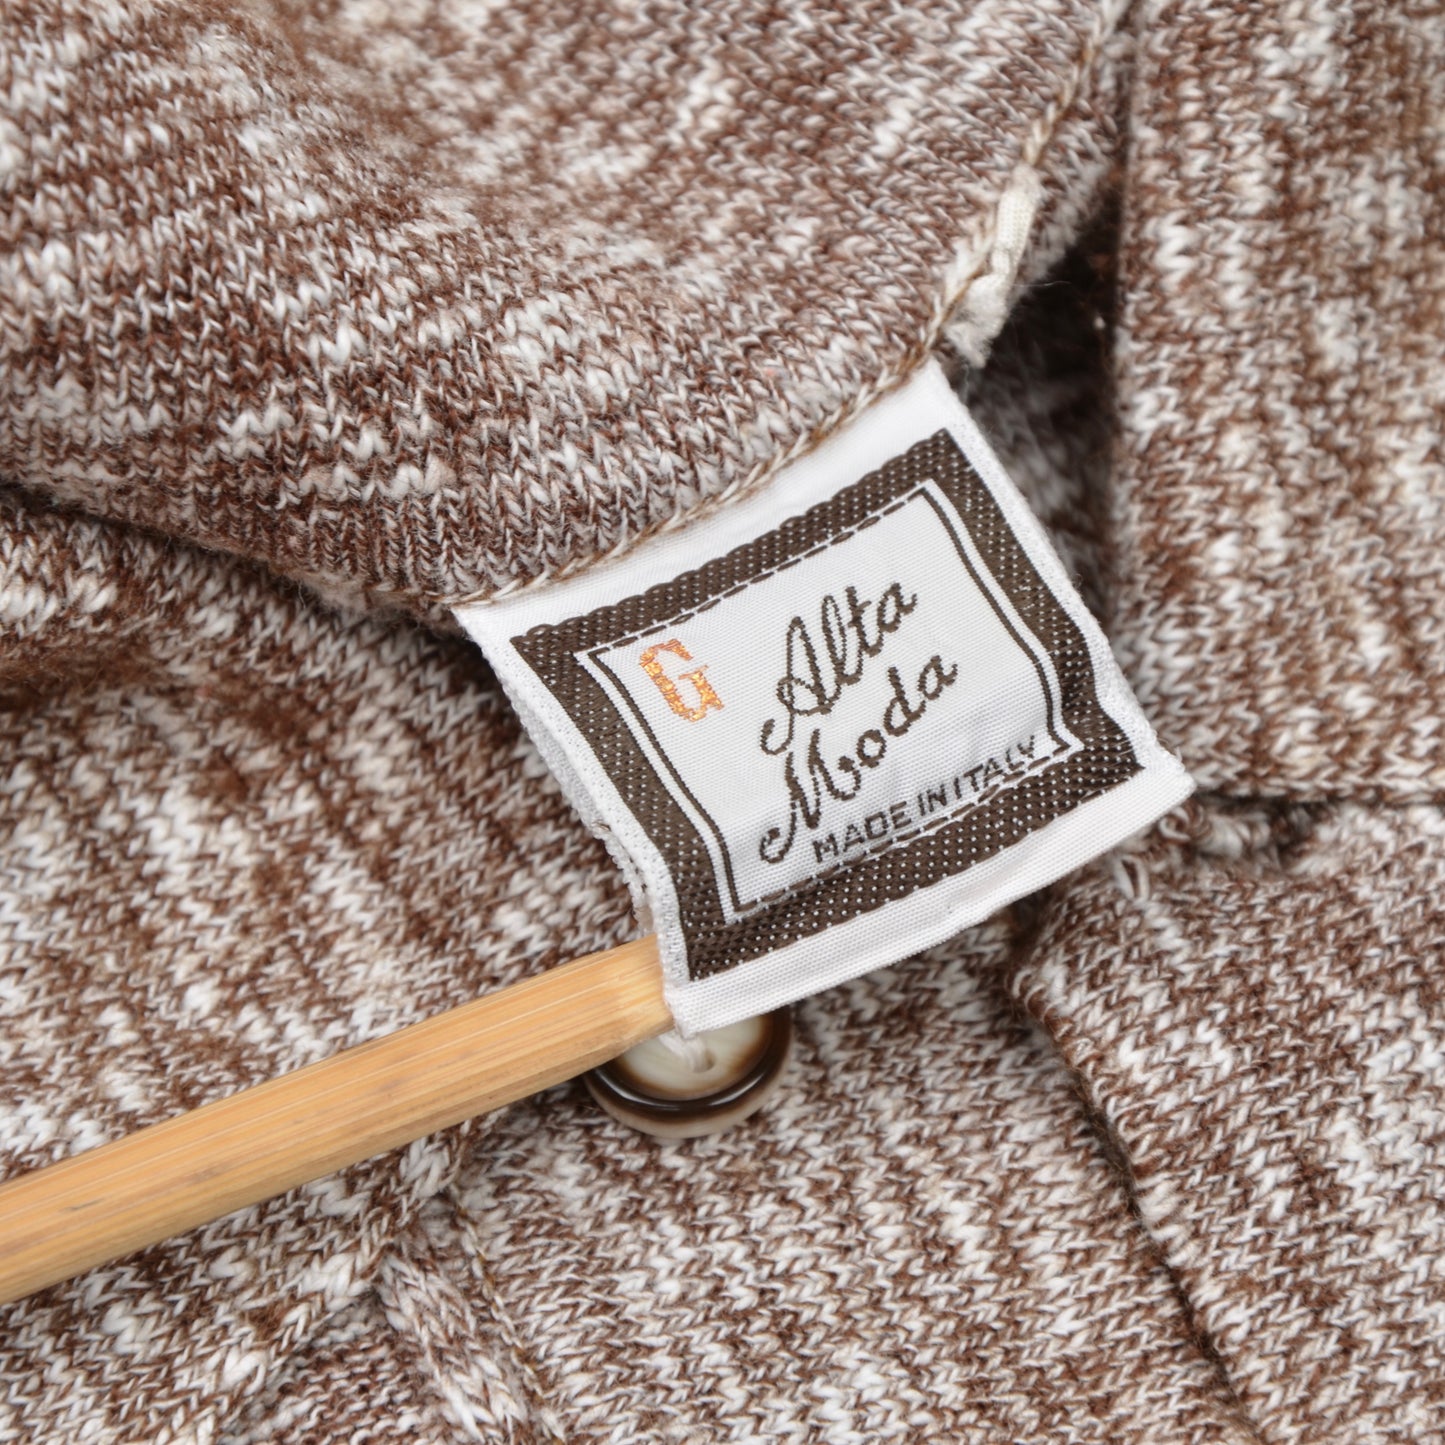 True Vintage 1960s Polo Shirt Wool Blend - Brown